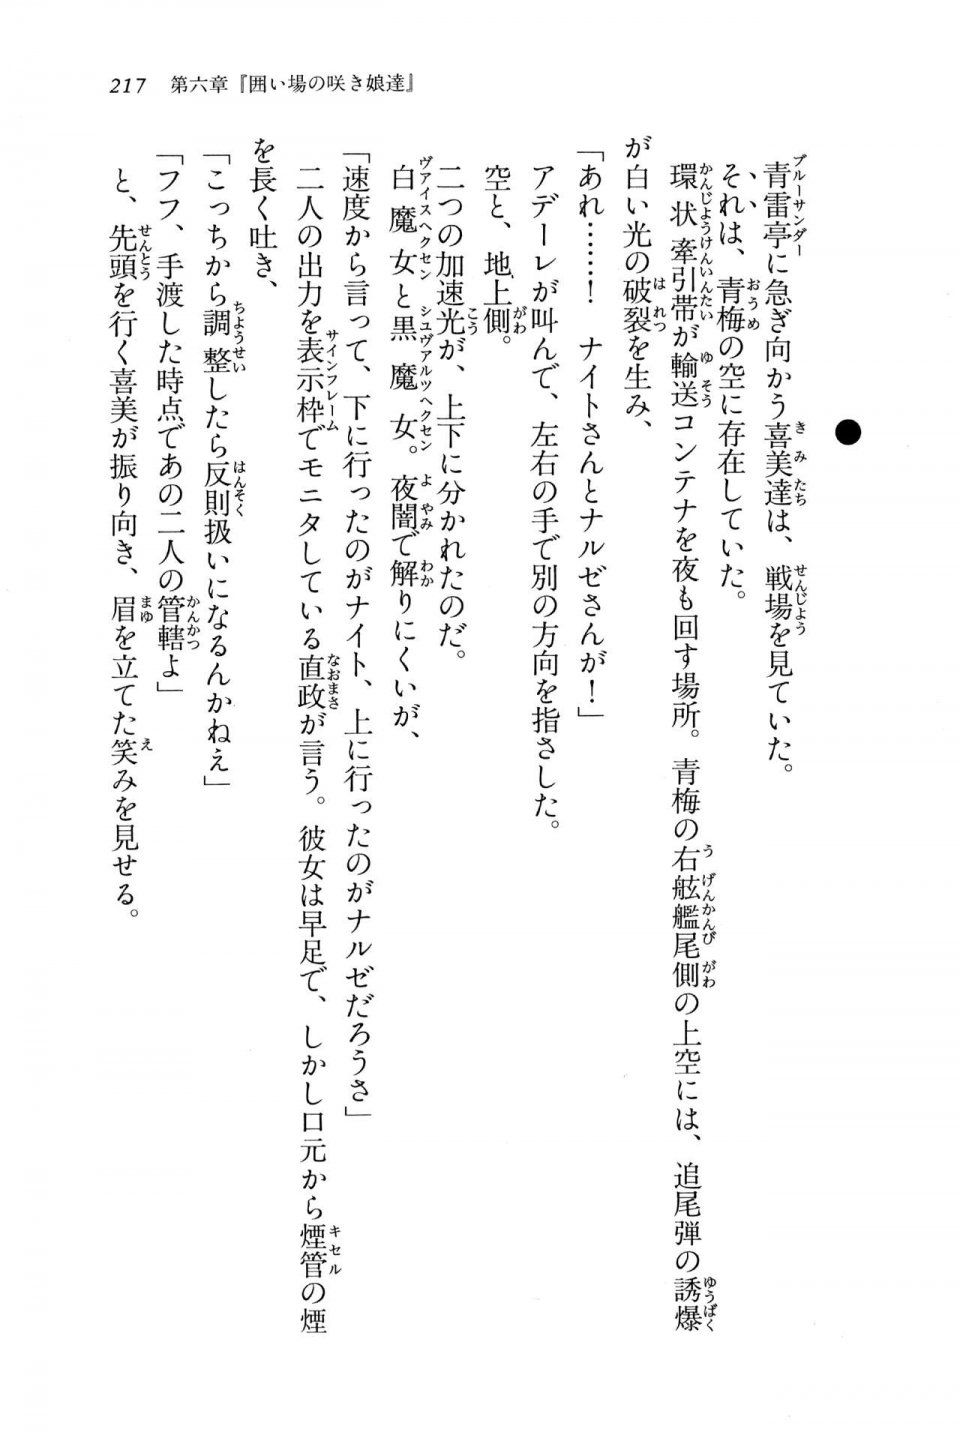 Kyoukai Senjou no Horizon BD Special Mininovel Vol 7(4A) - Photo #221